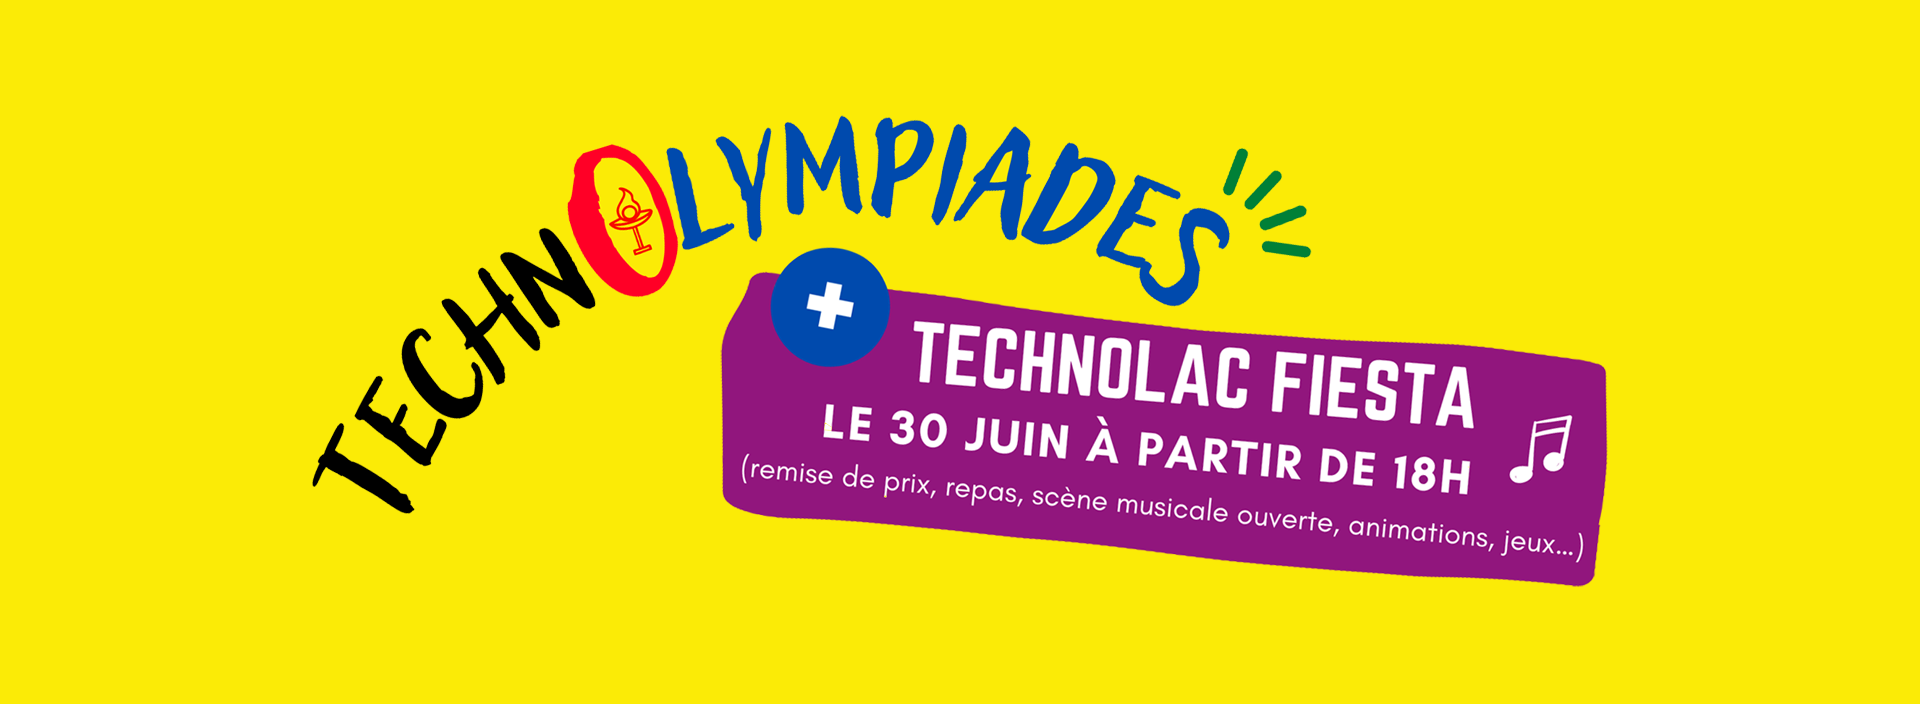 TechnOlympiades et Technolac Fiesta